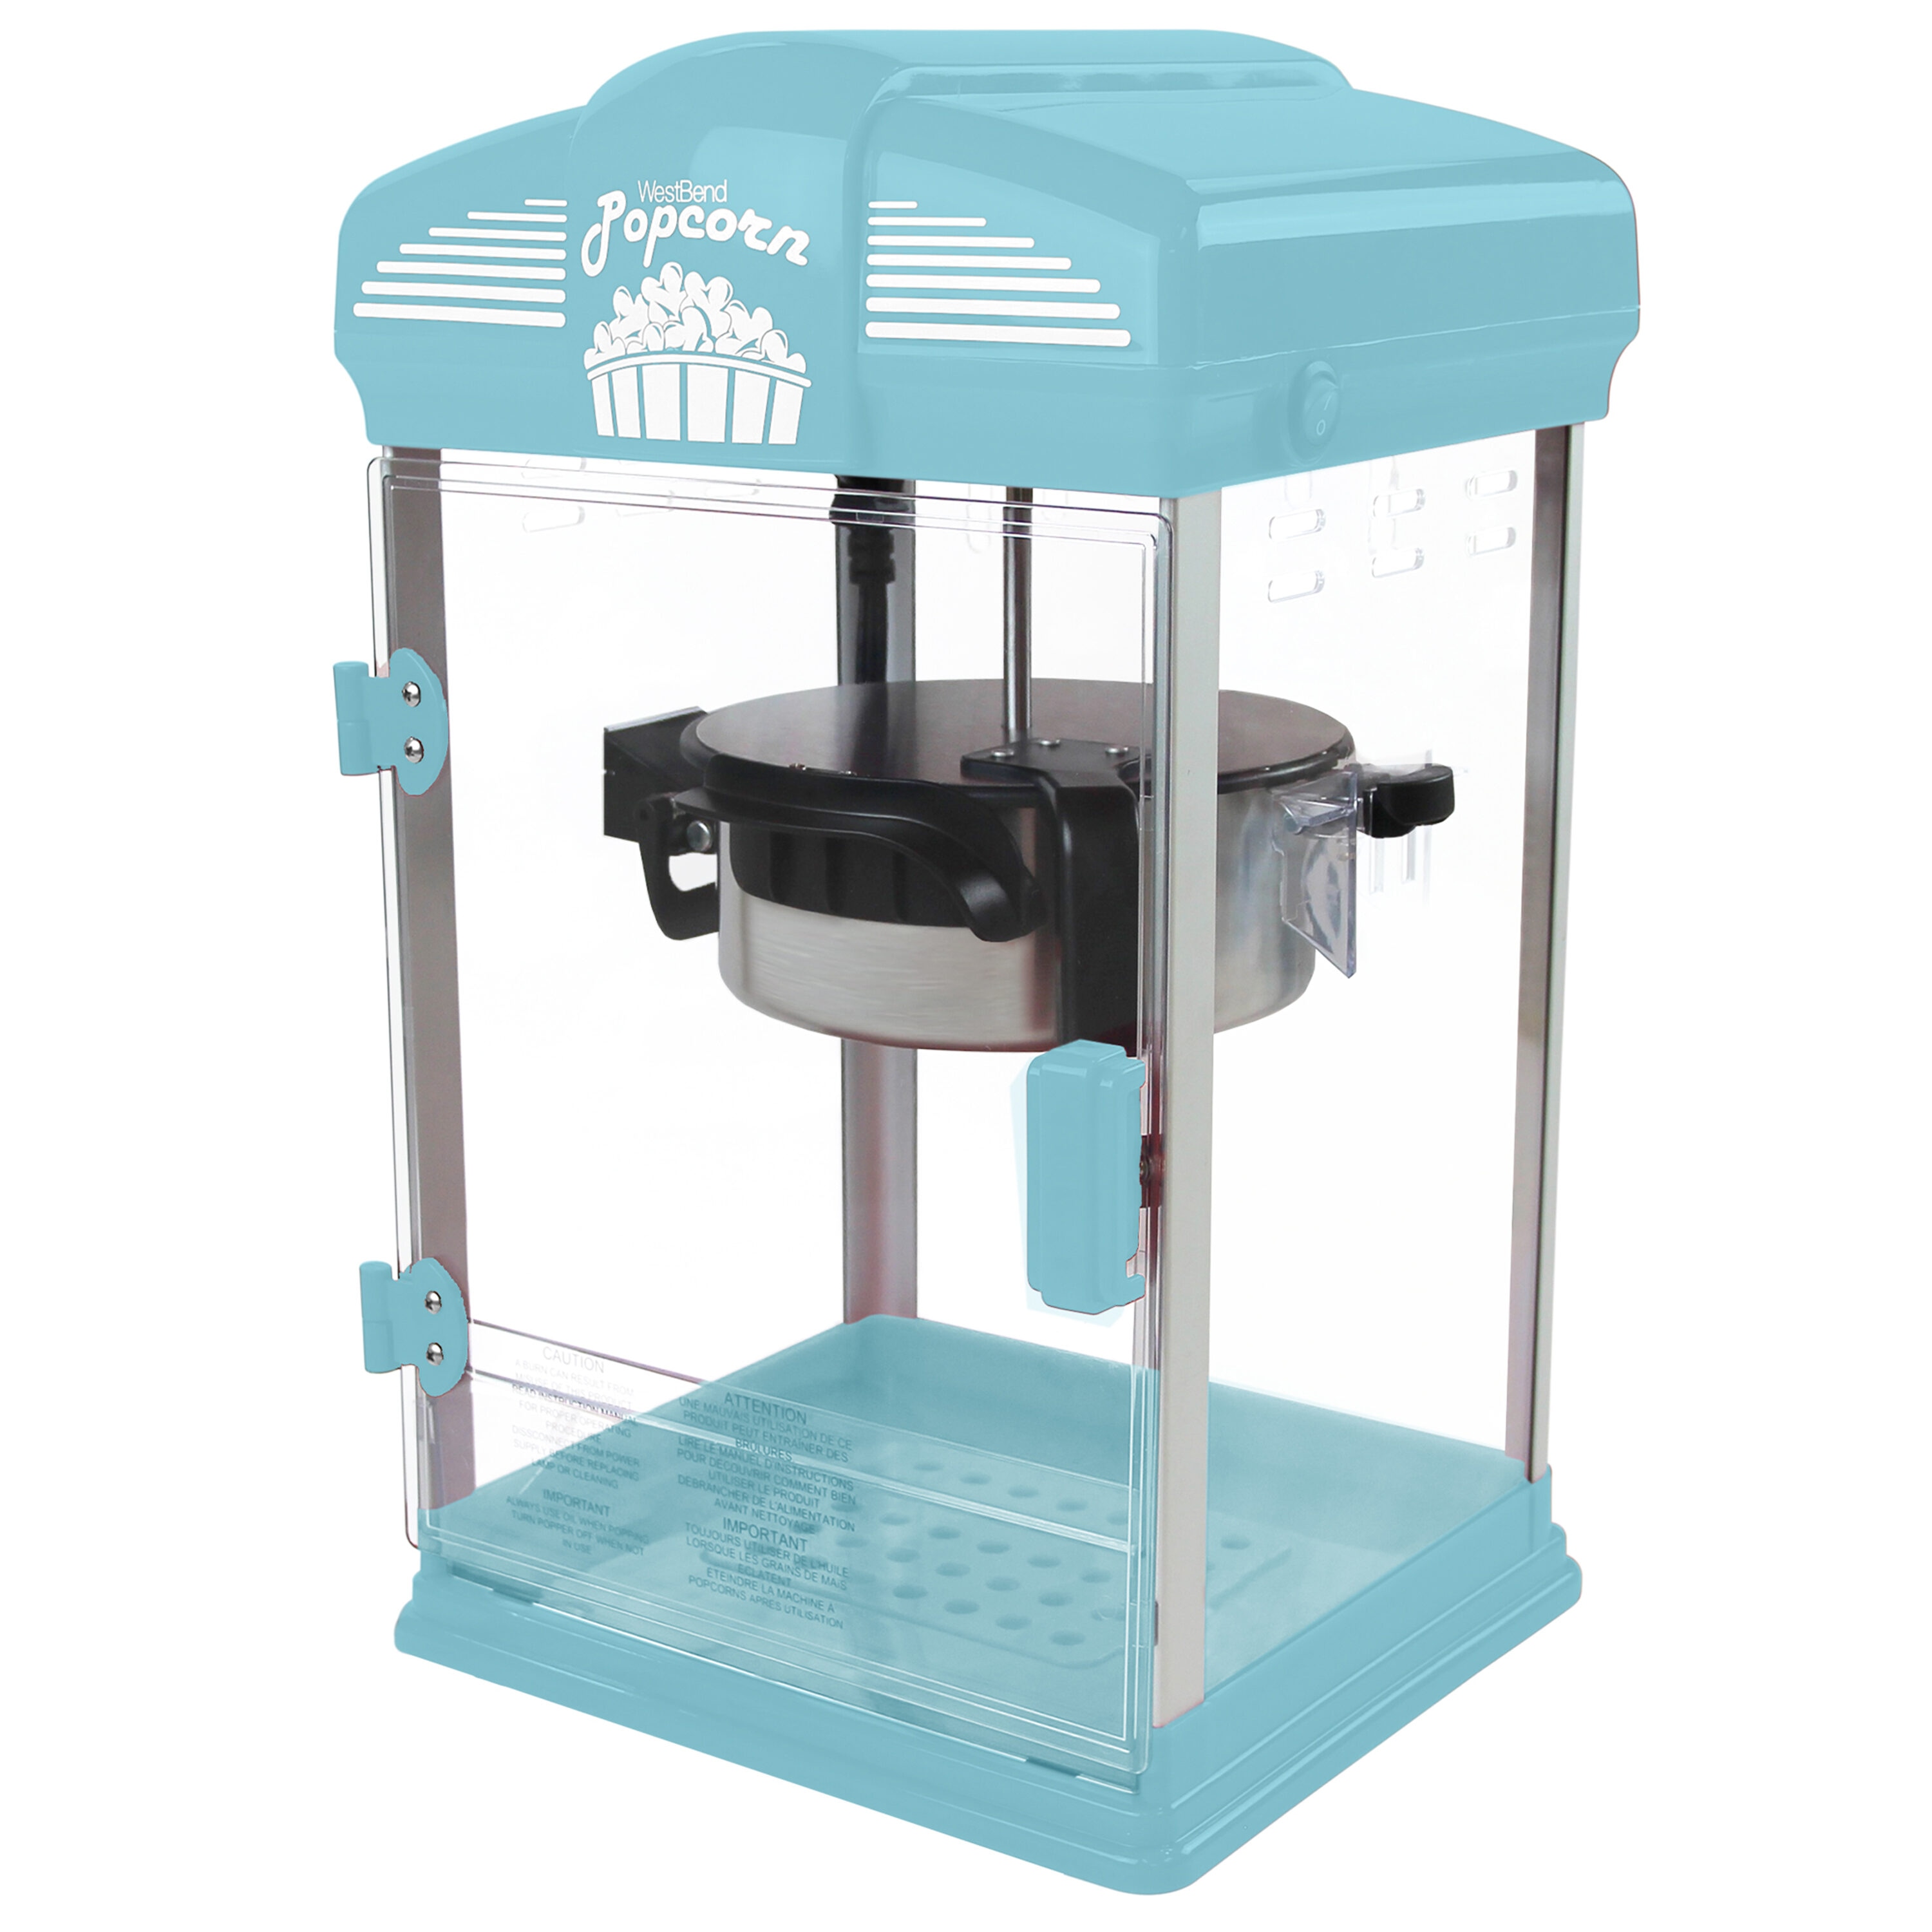 WestBend Stir Crazy Popcorn Machine Review